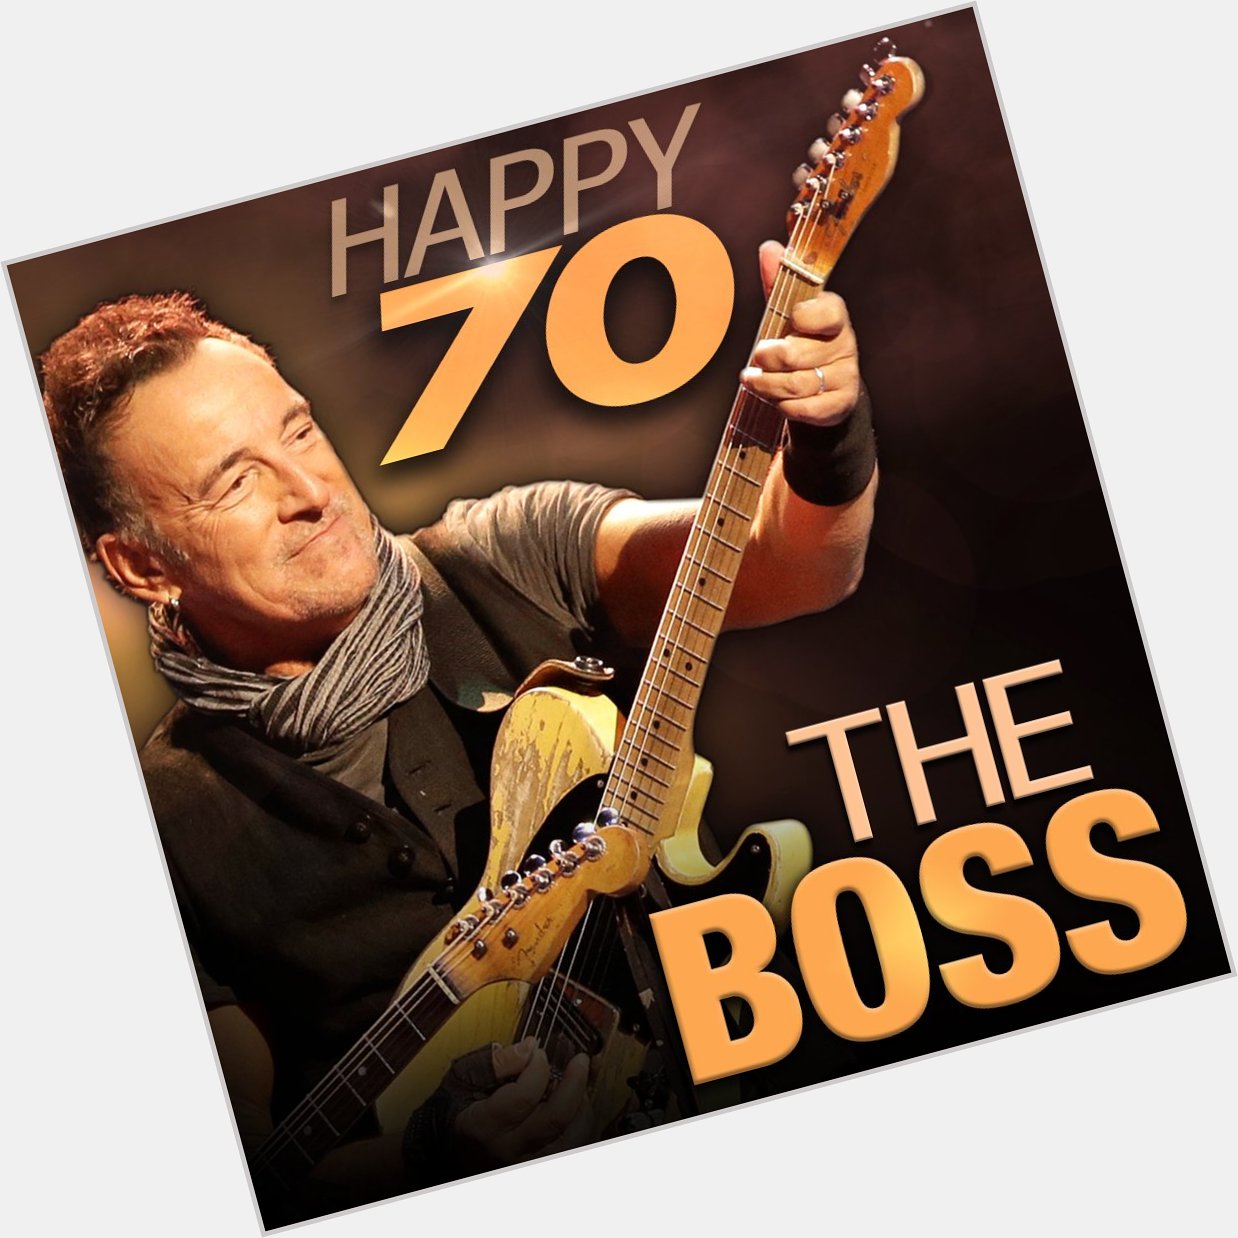 HAPPY BIRTHDAY: Bruce Springsteen turns 70 today!  